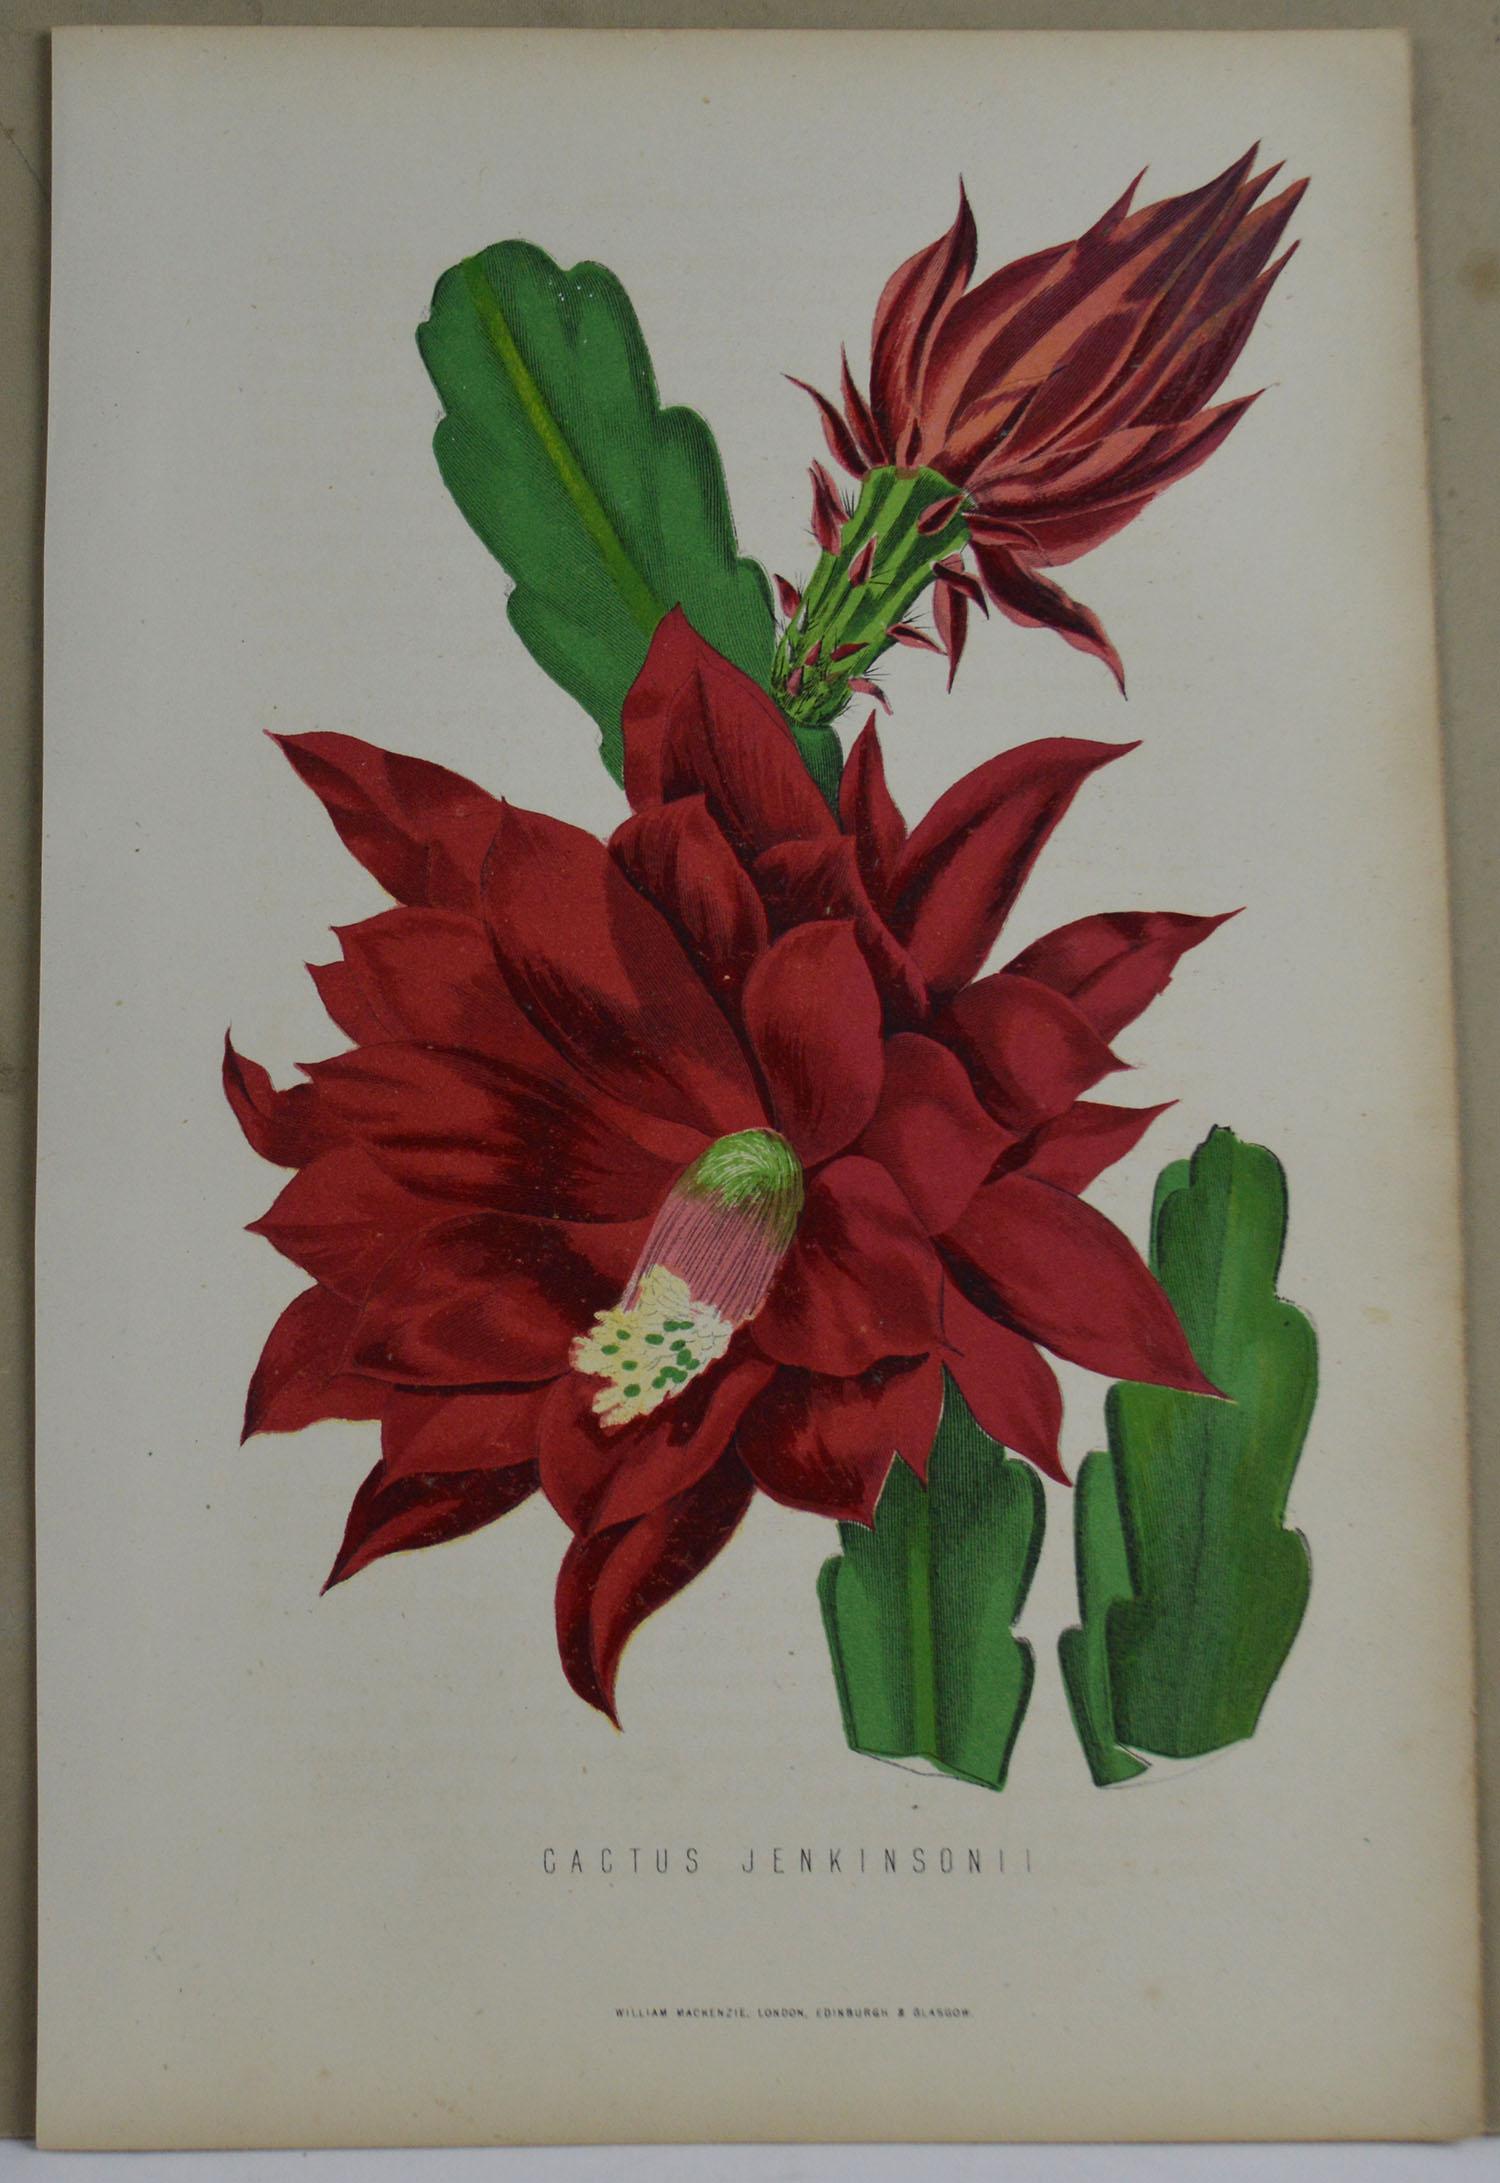 Chinese Export Original Antique Botanical Print - Cactus Jenkinsonii. Unframed, circa 1850